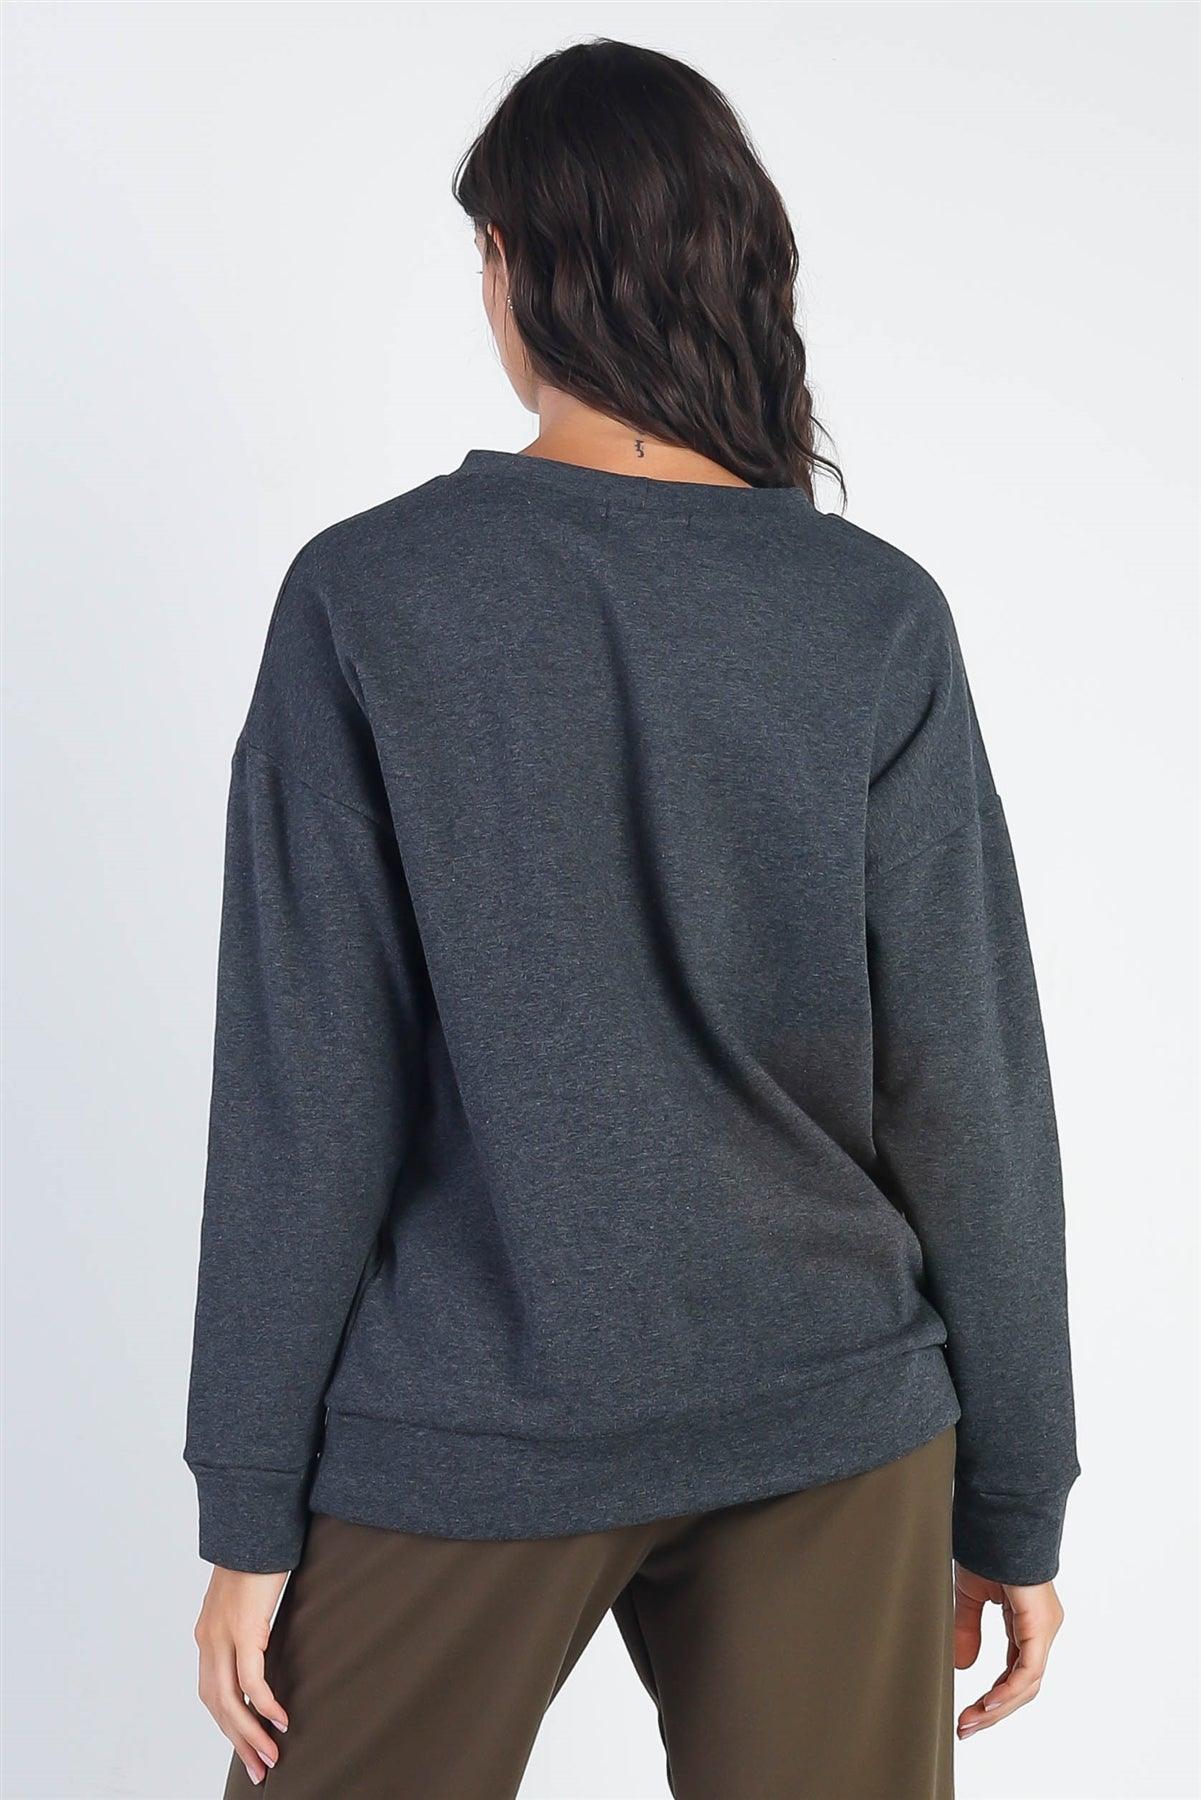 Charcoal Long Sleeve Sweater /1-1-1